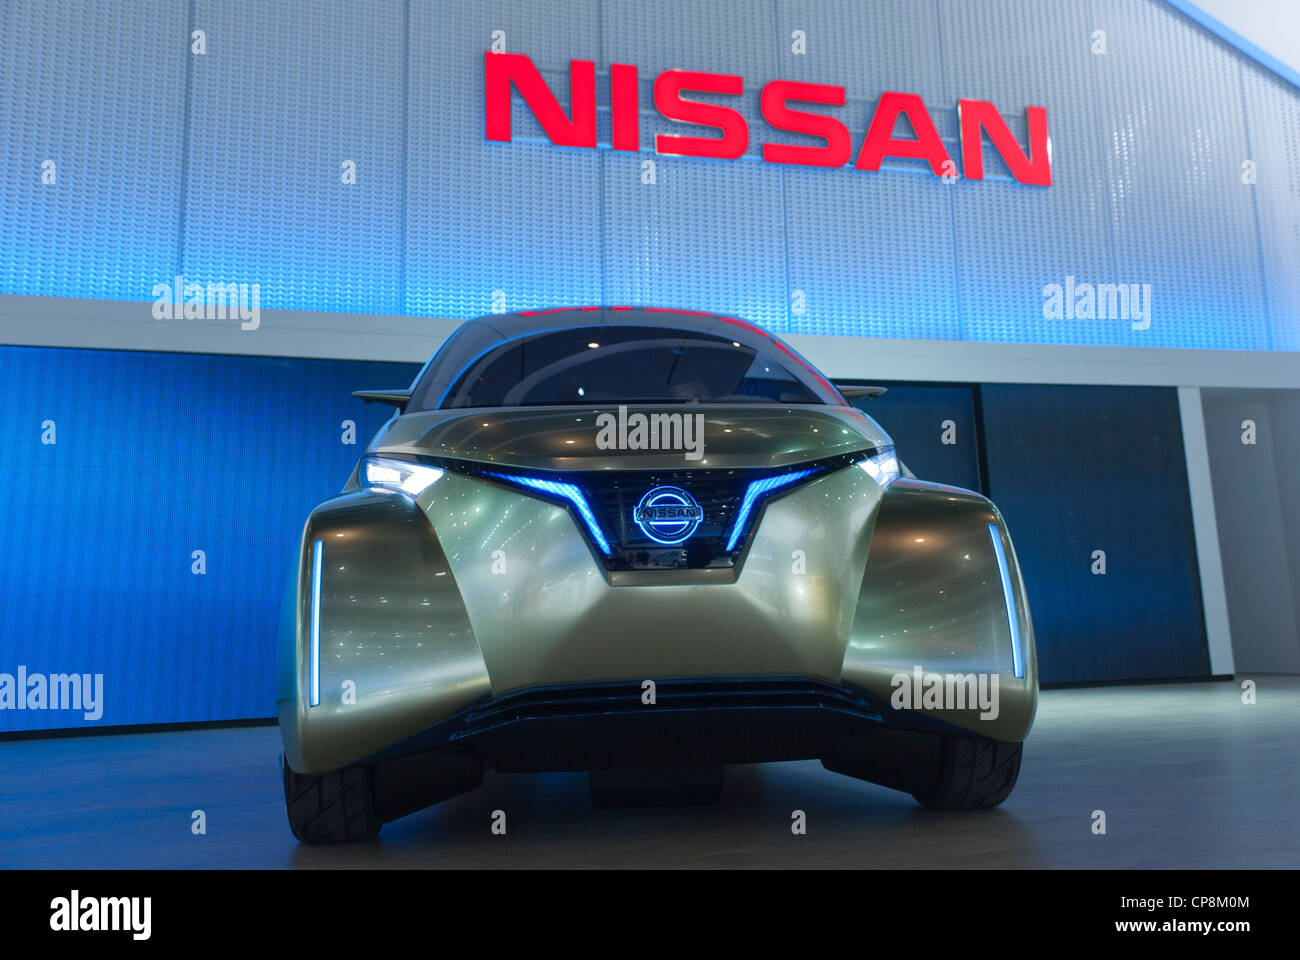 NISSAN concept car Stock Photo